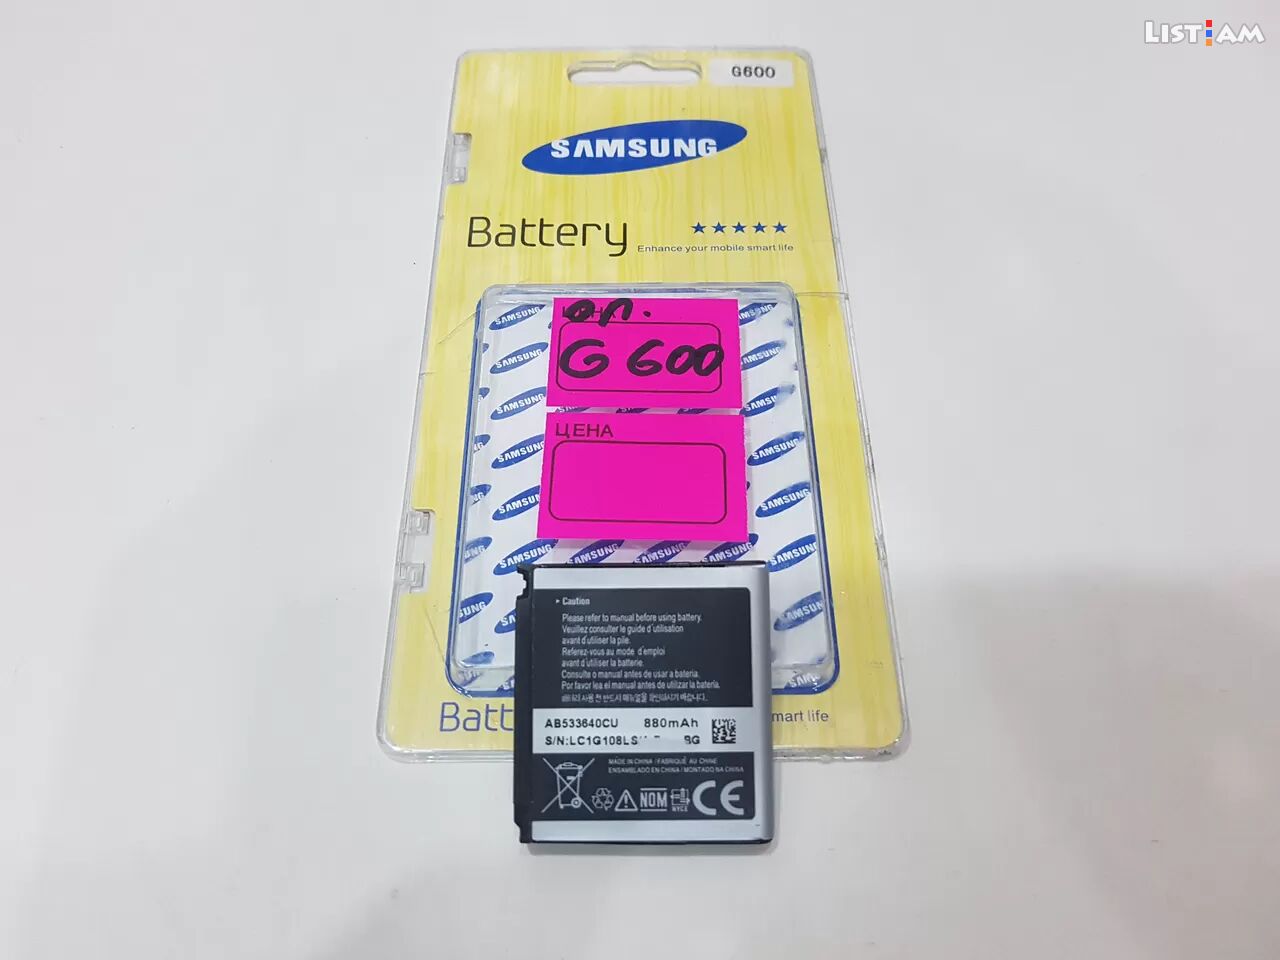 Samsung g600 battery